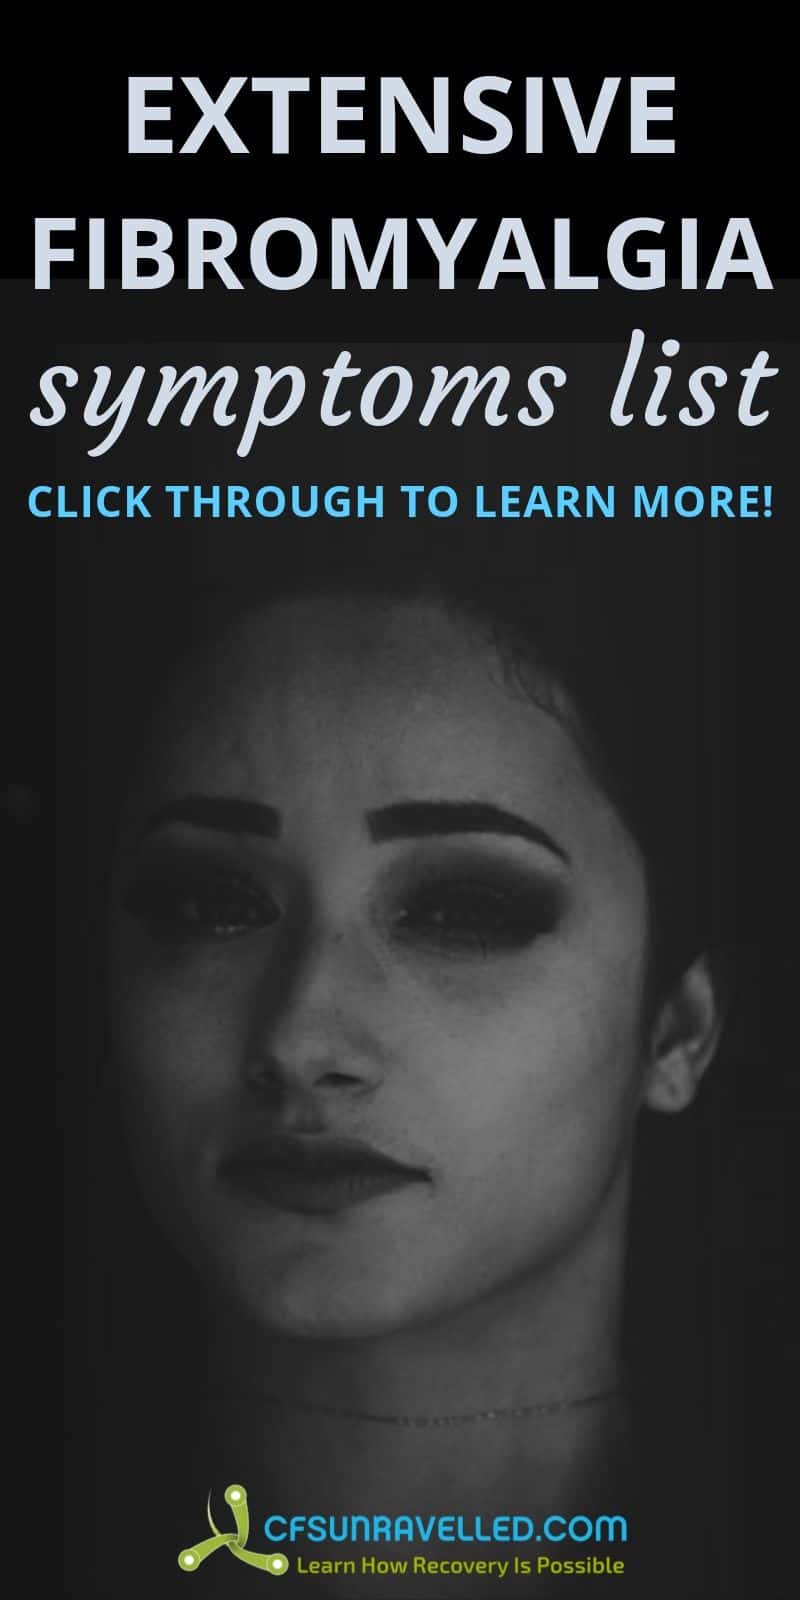 woman in dark with headline about extensive fibromyalgia symptoms list